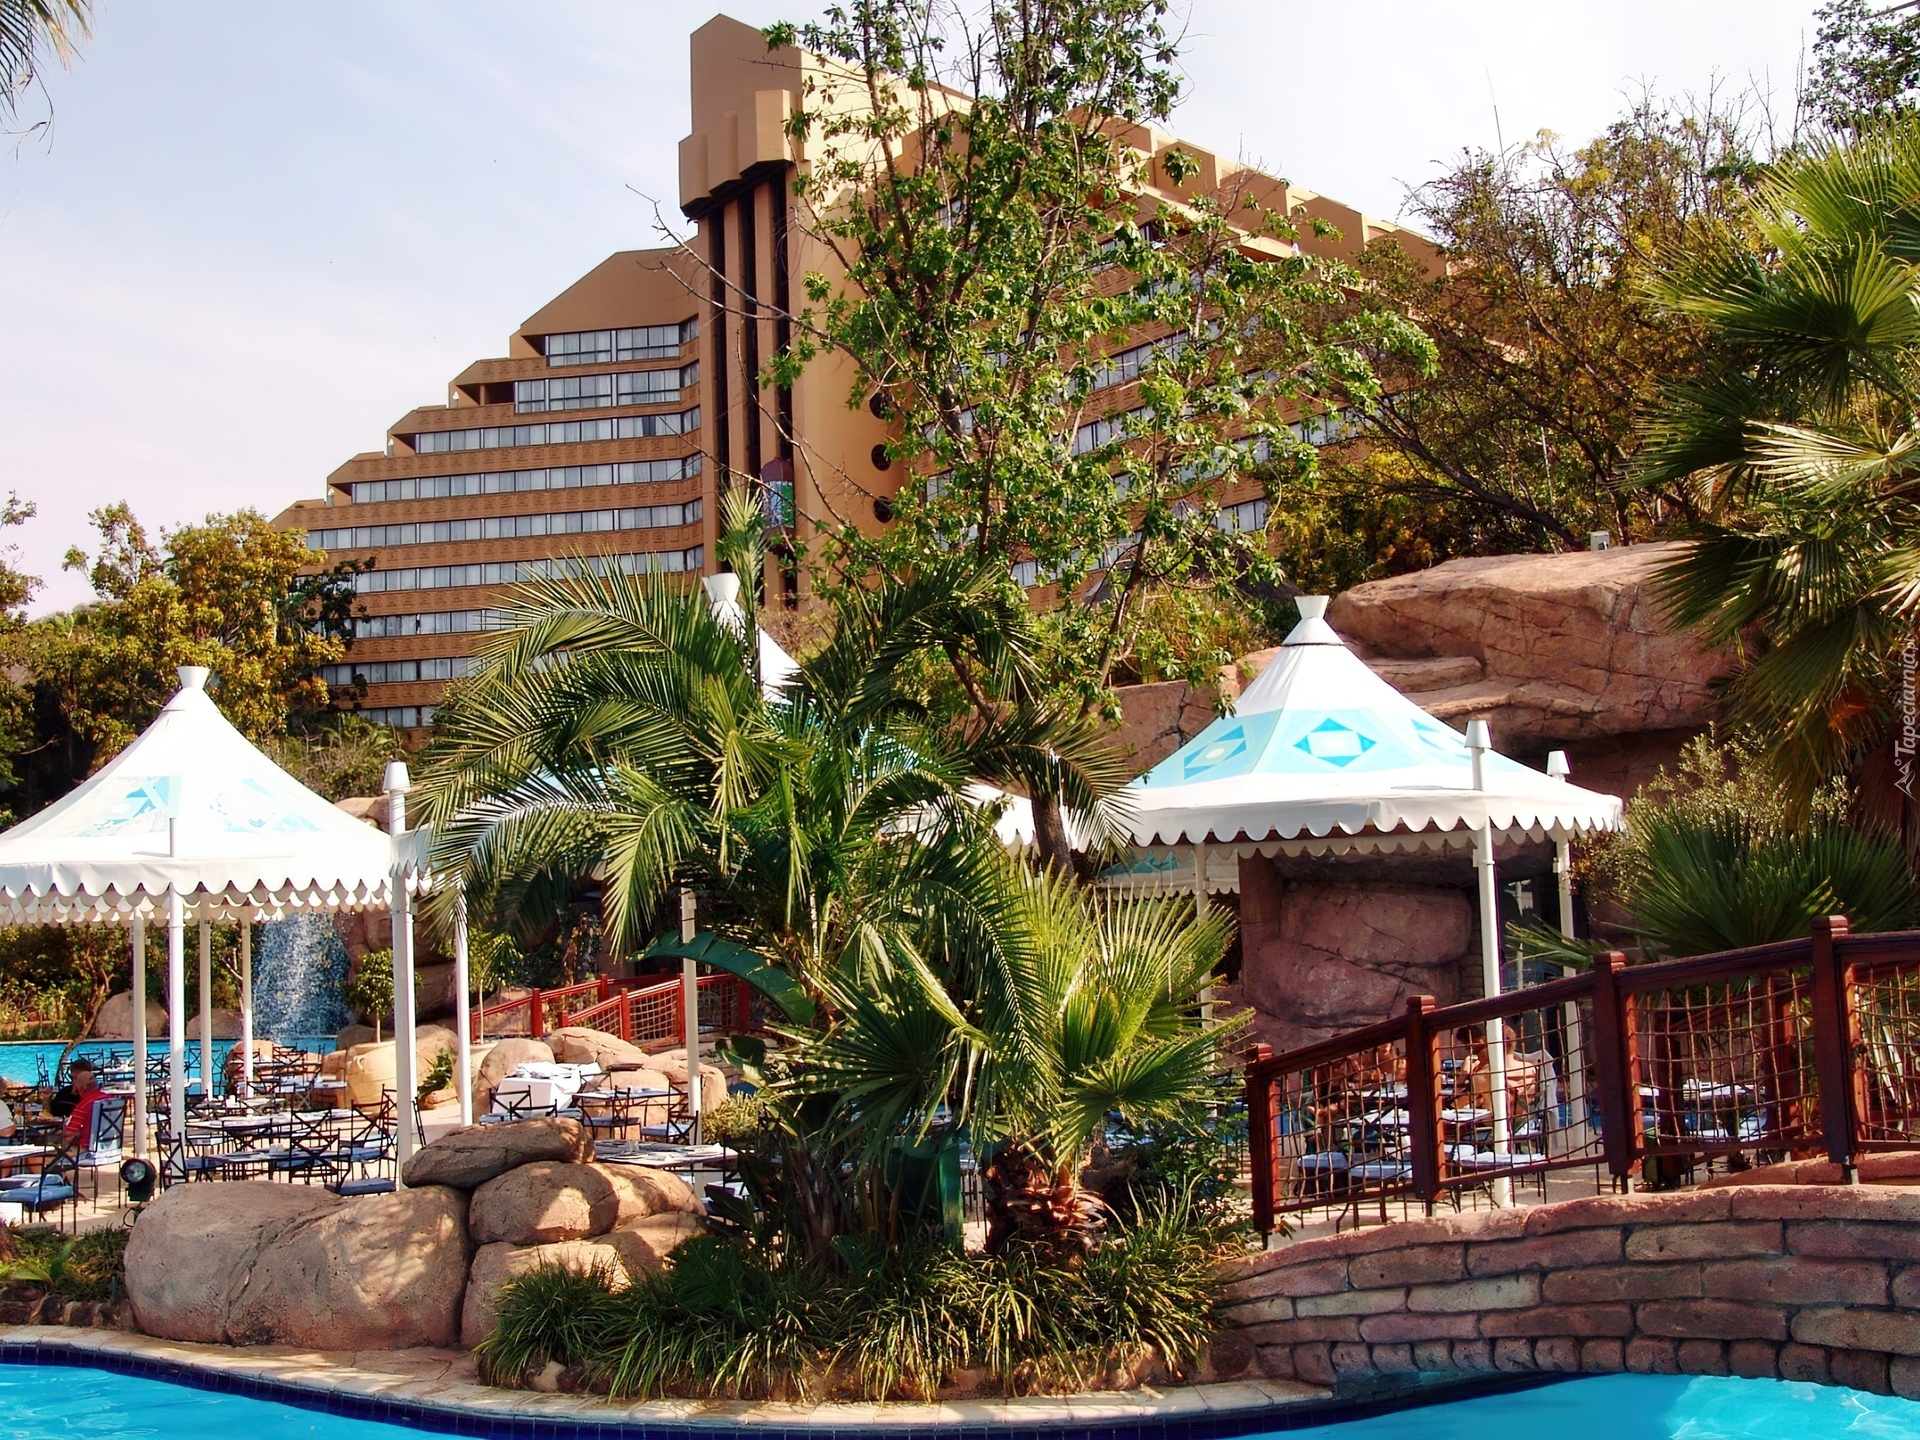 Hotel, Basen, Mostek, Południowa Afryka